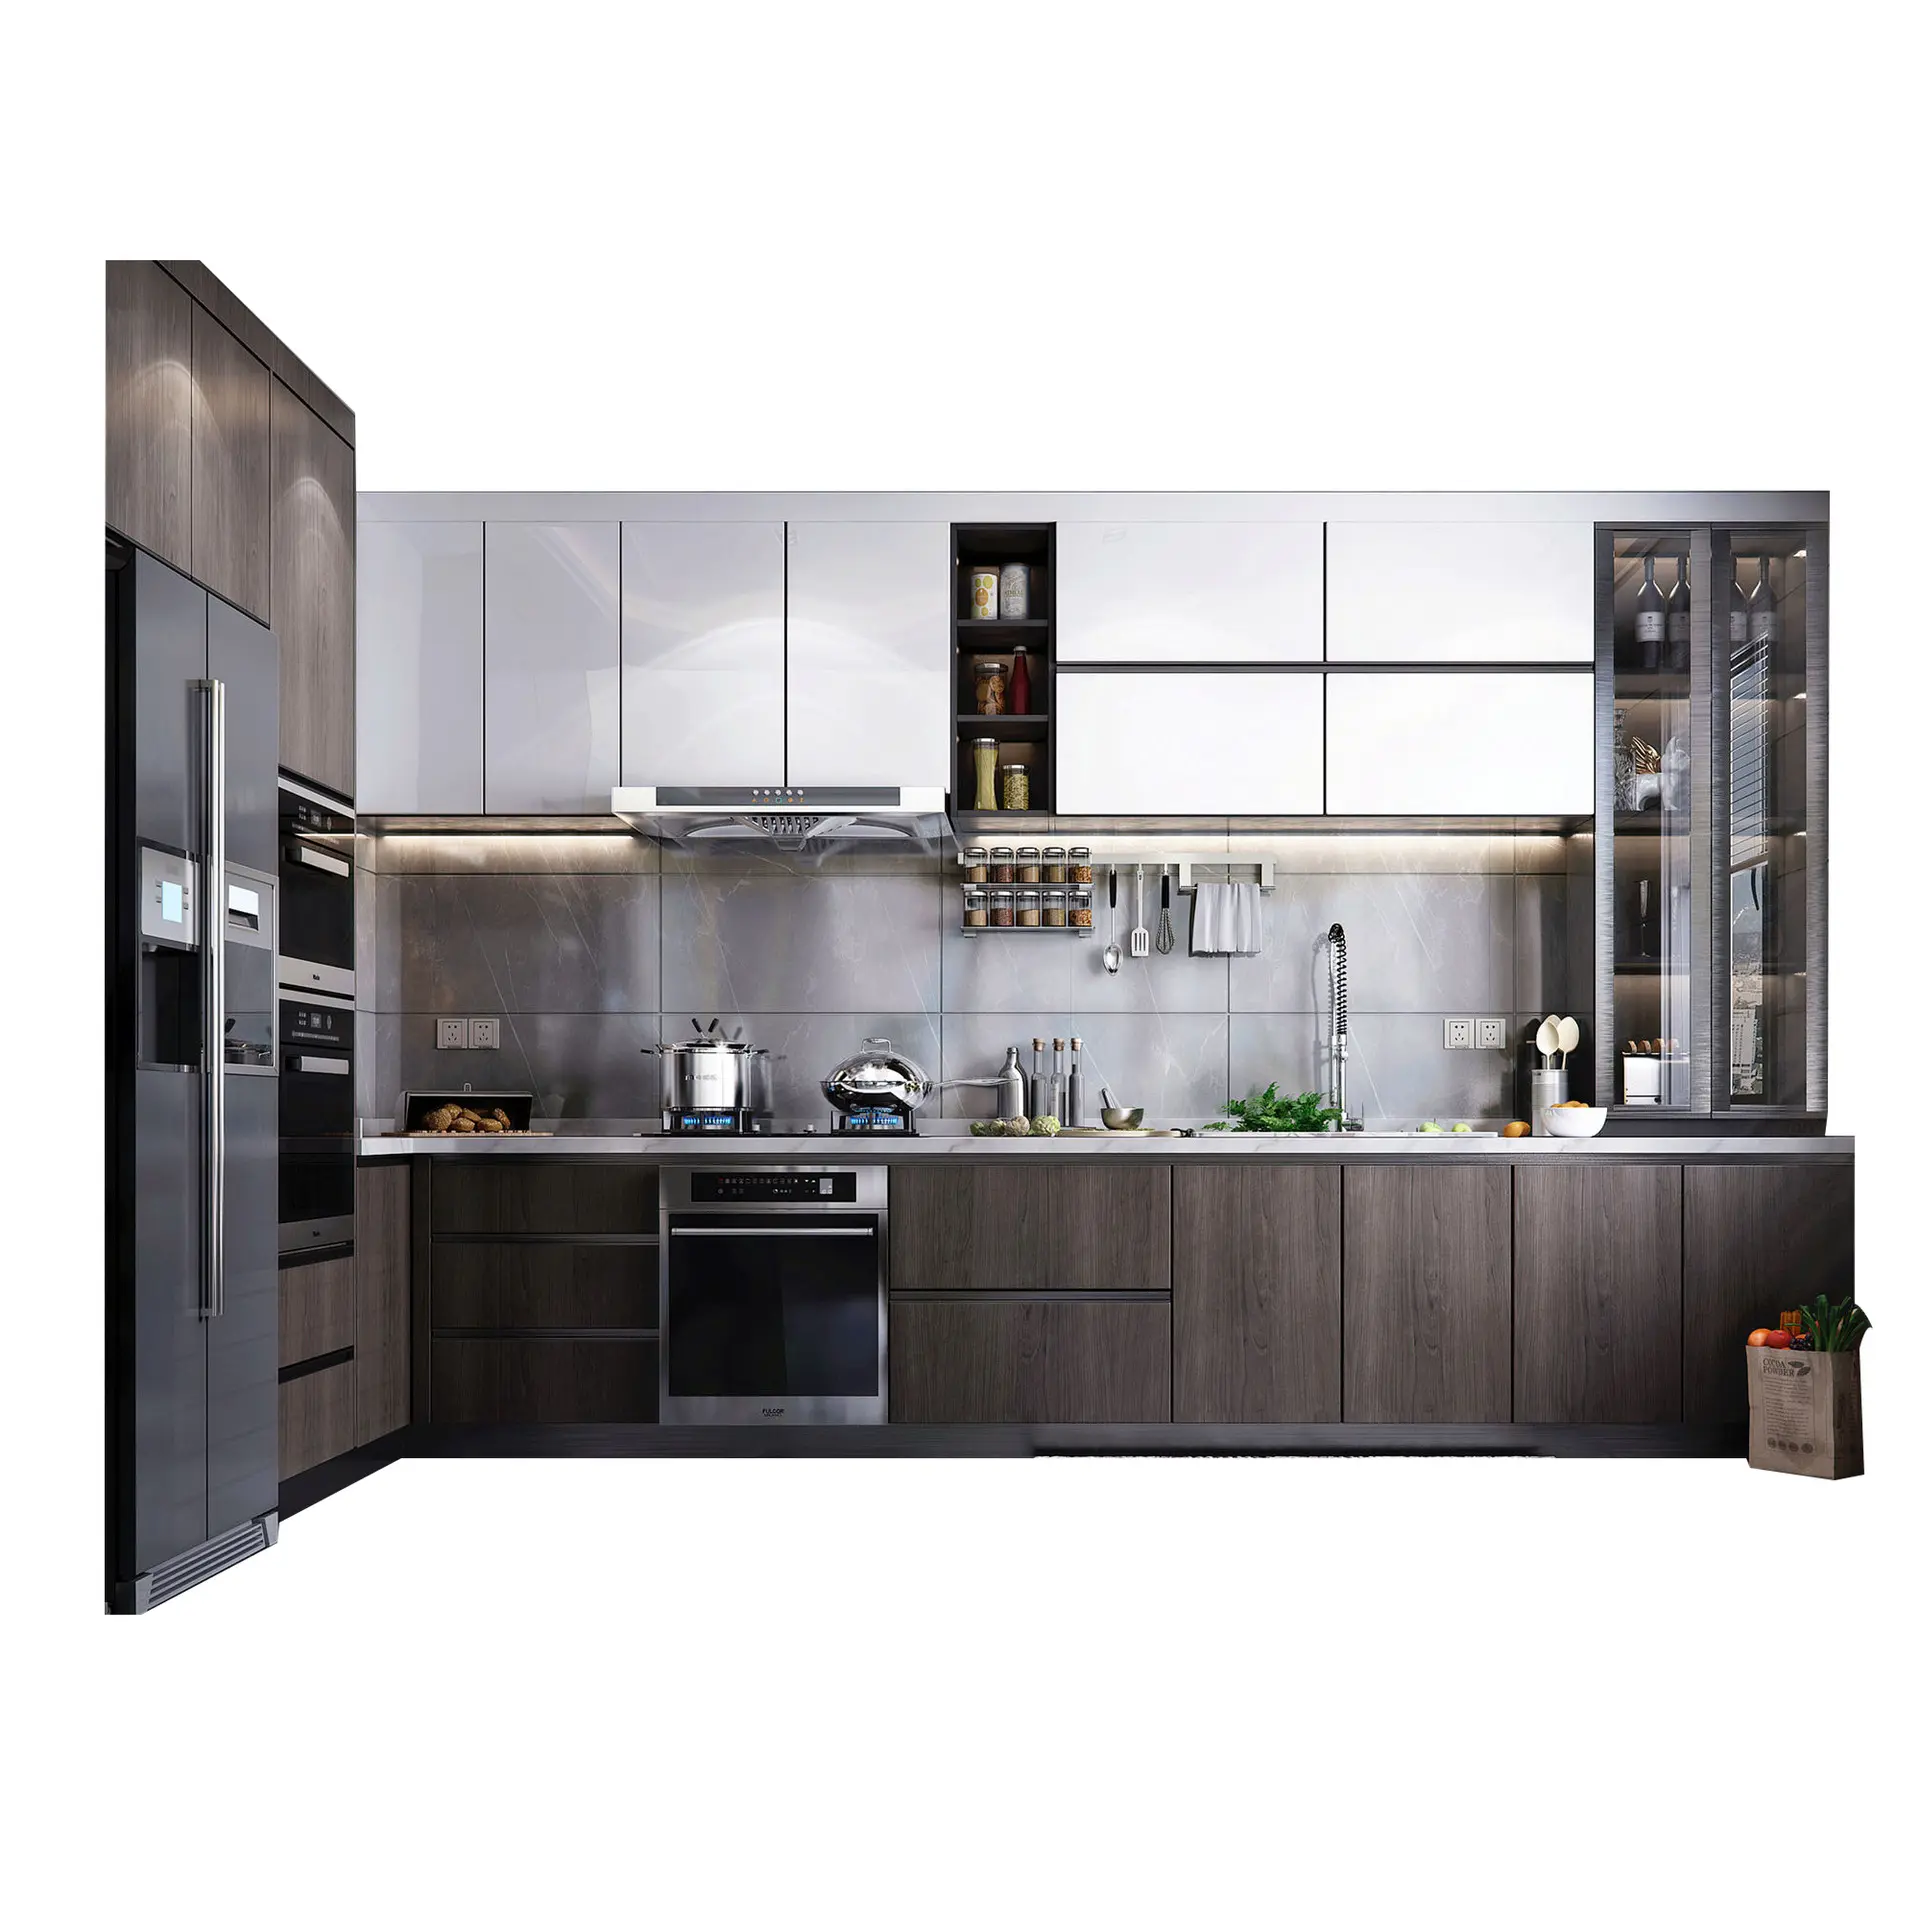 उच्च गुणवत्ता वाले आधुनिक रसोई अलमारियाँ घर डिजाइन पूर्ण रसोई सेट